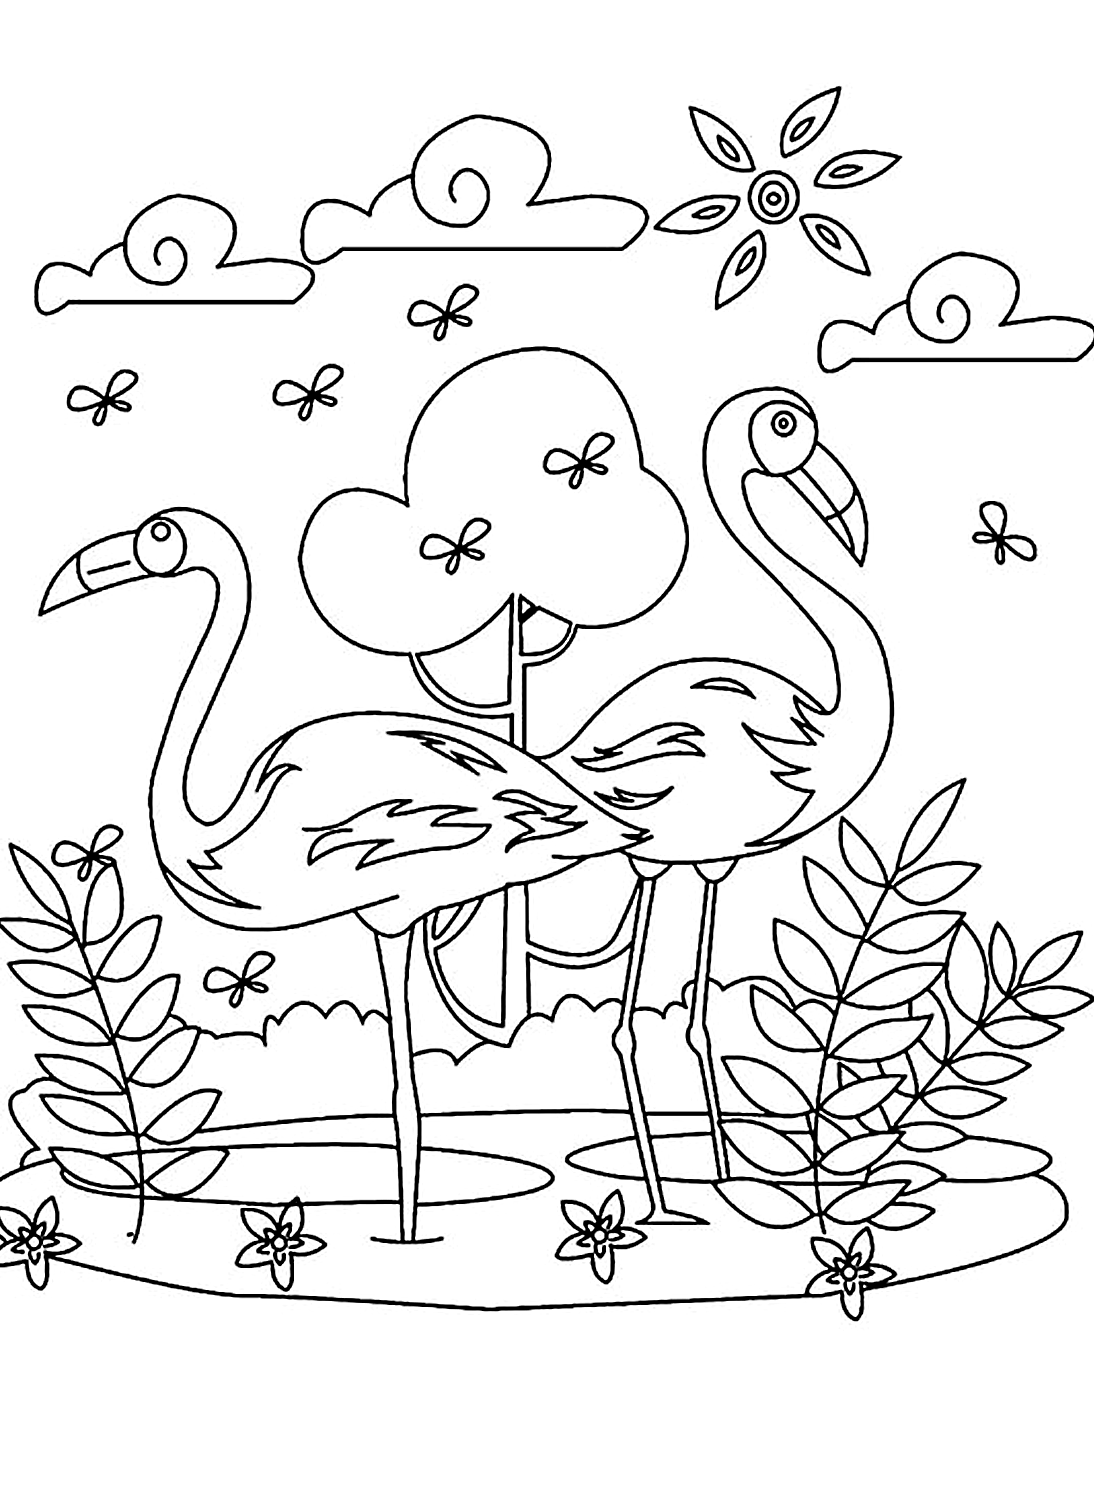 Coloring Sheet Flamingo from Flamingo